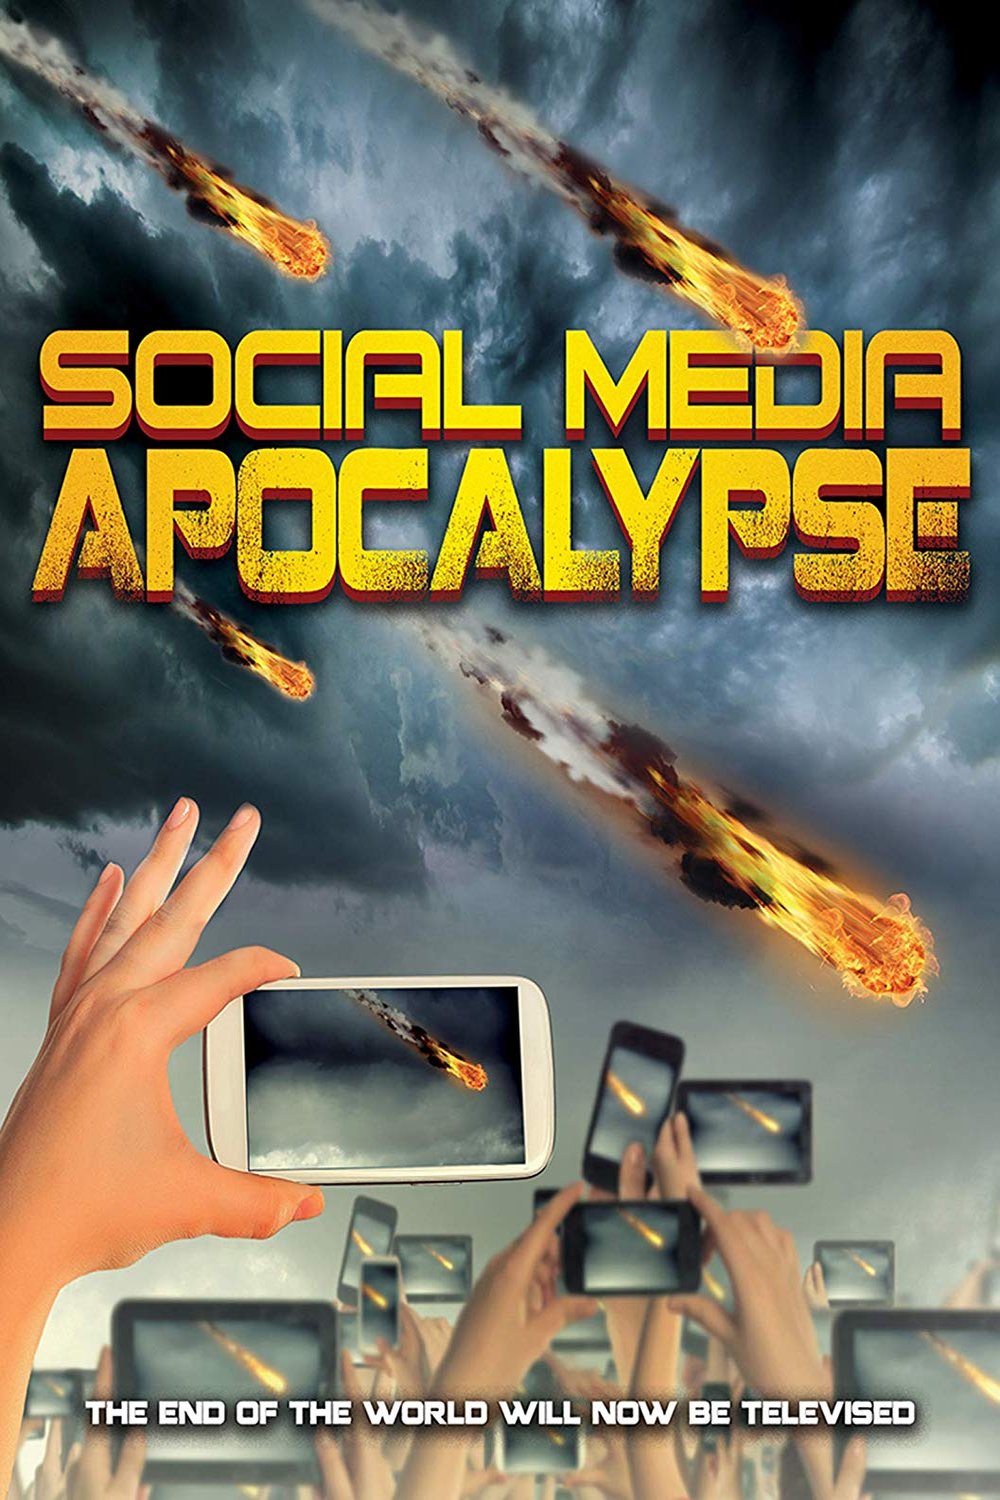 Poster of the movie Social Media Apocalypse